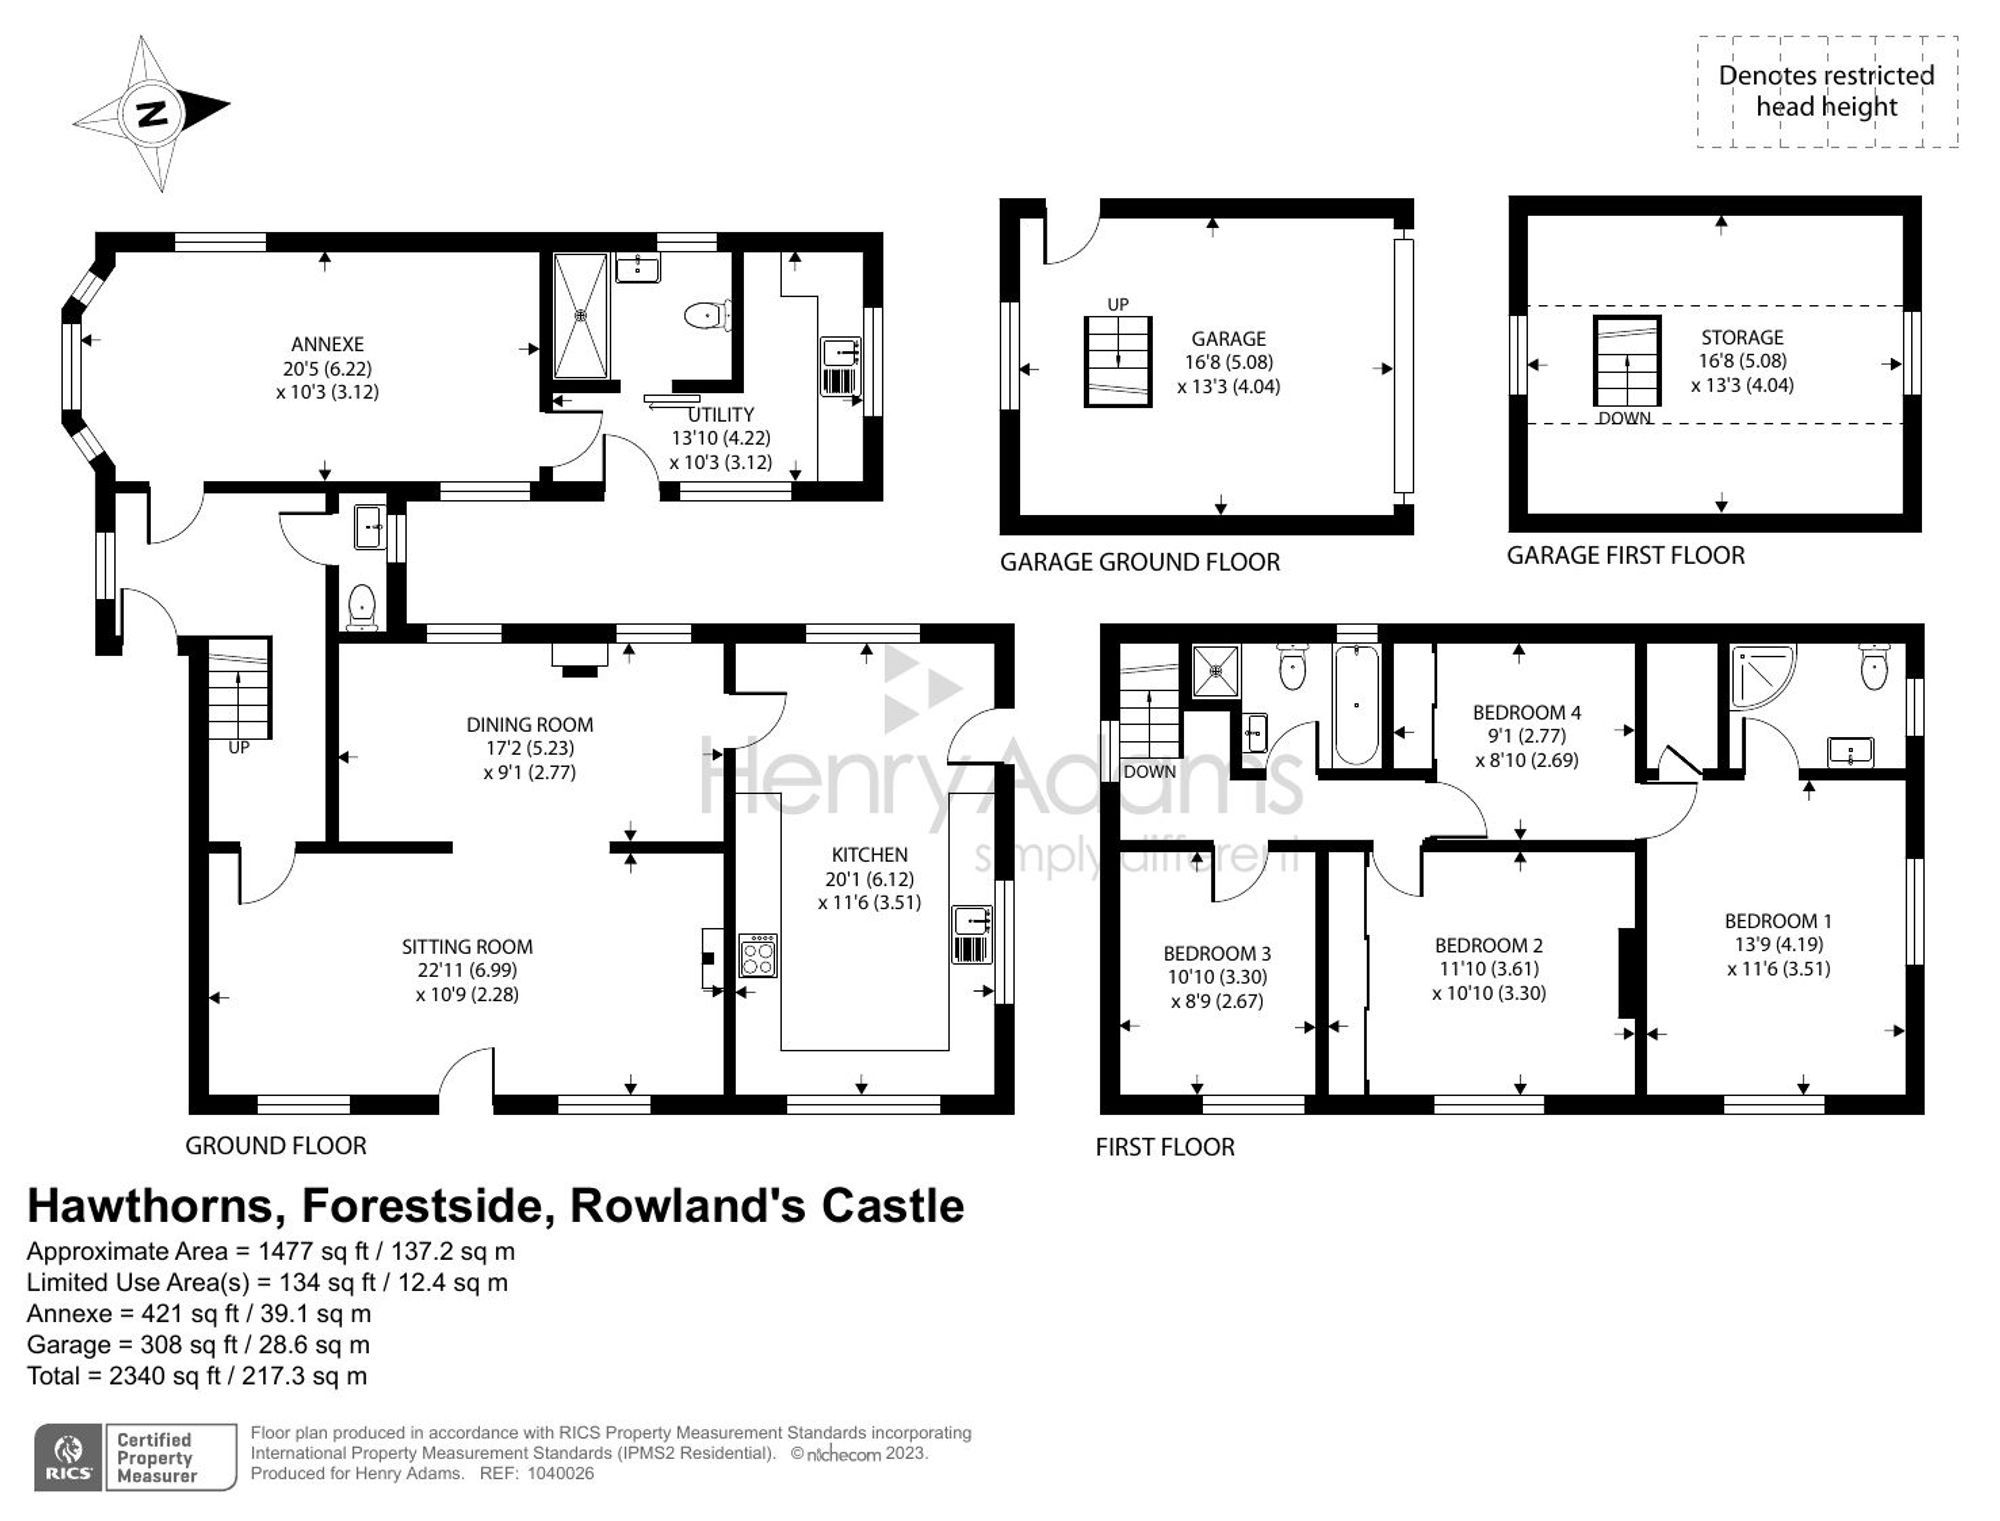 Forestside, Rowland's Castle, PO9 floorplans